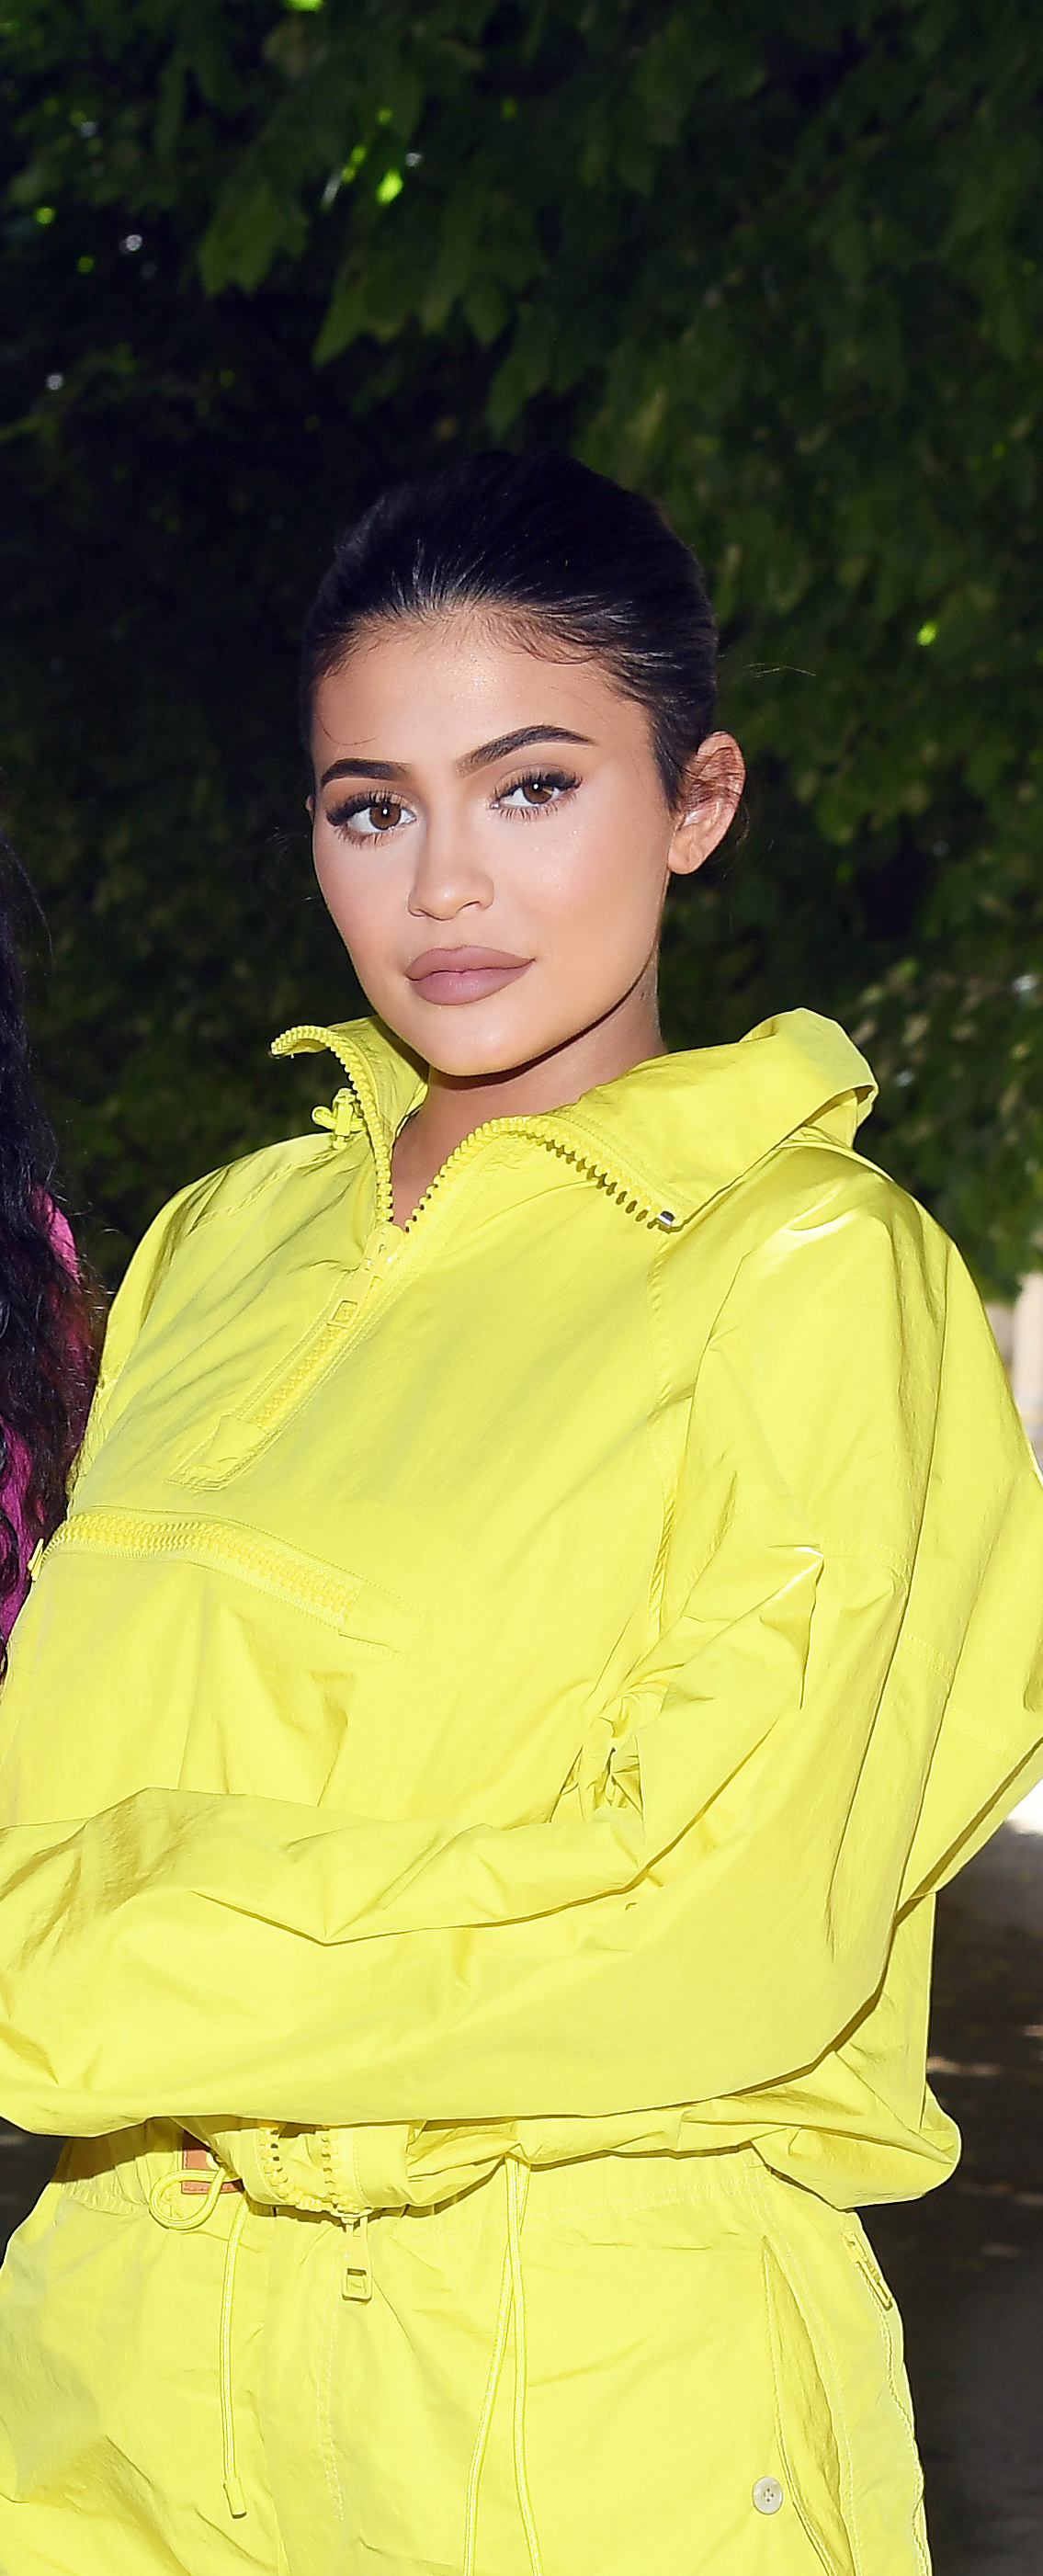 Kylie Jenner Fave Mascara: Dior Diorshow Black Out